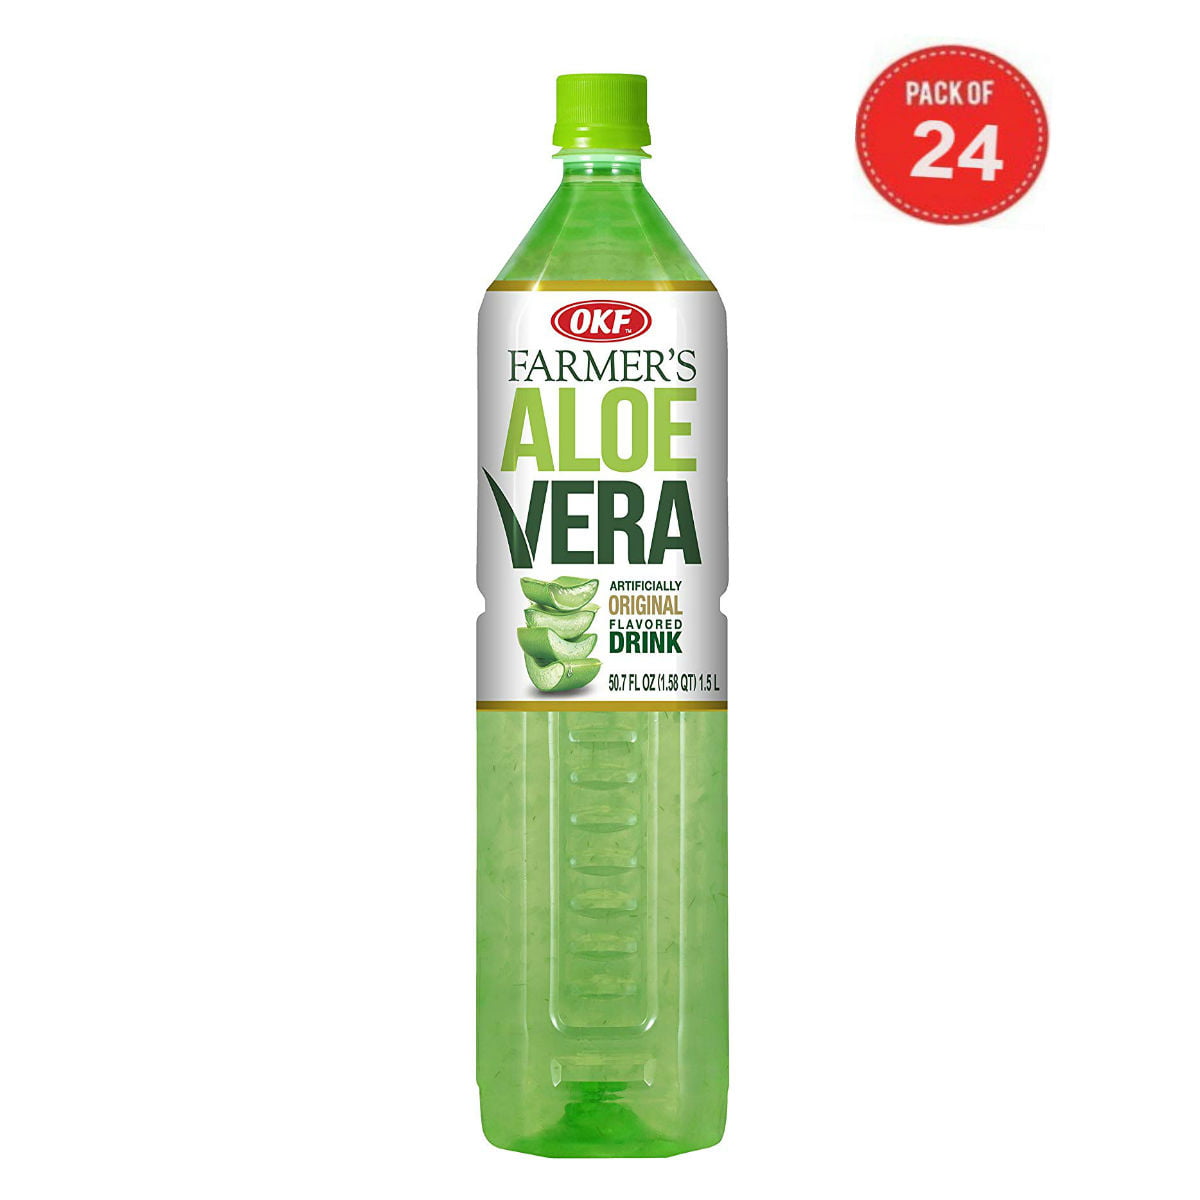 Blanco Uitgaan Onvervangbaar OKF Farmer's Aloe Vera Drink, Original, 1.5 Liter (Pack of 24) - Walmart.com